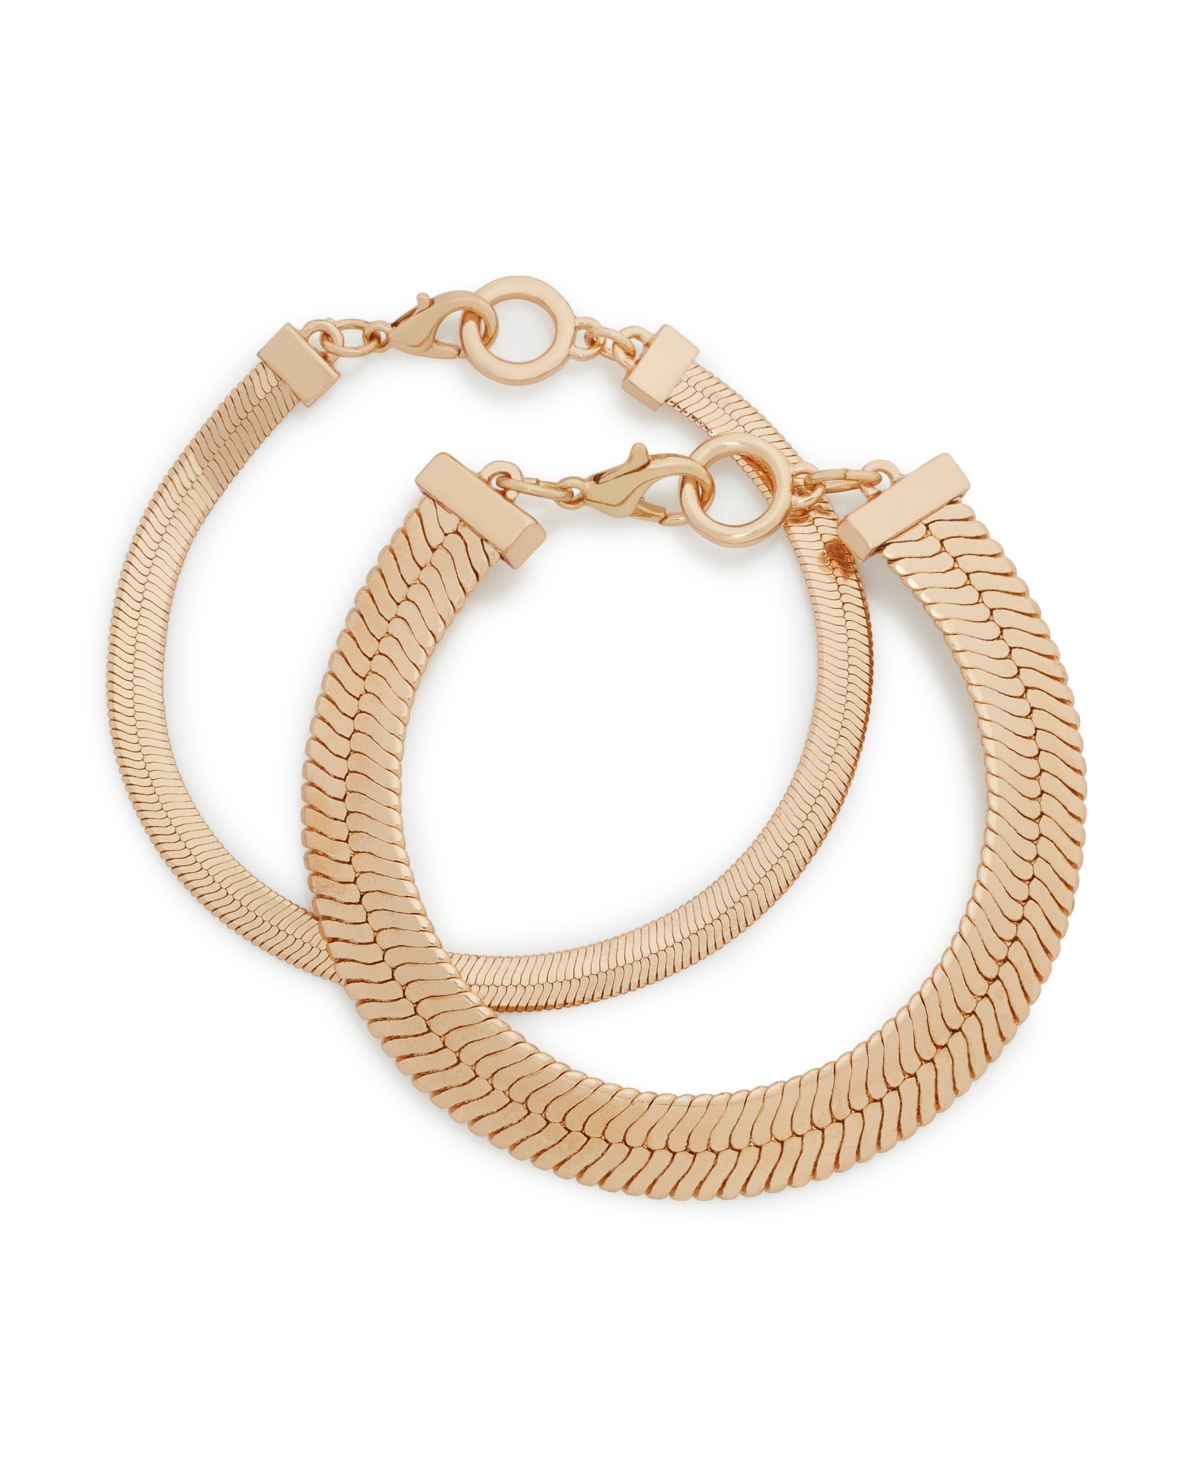 Steve Madden Herringbone Bracelet Set, 2 Piece In Gold-tone